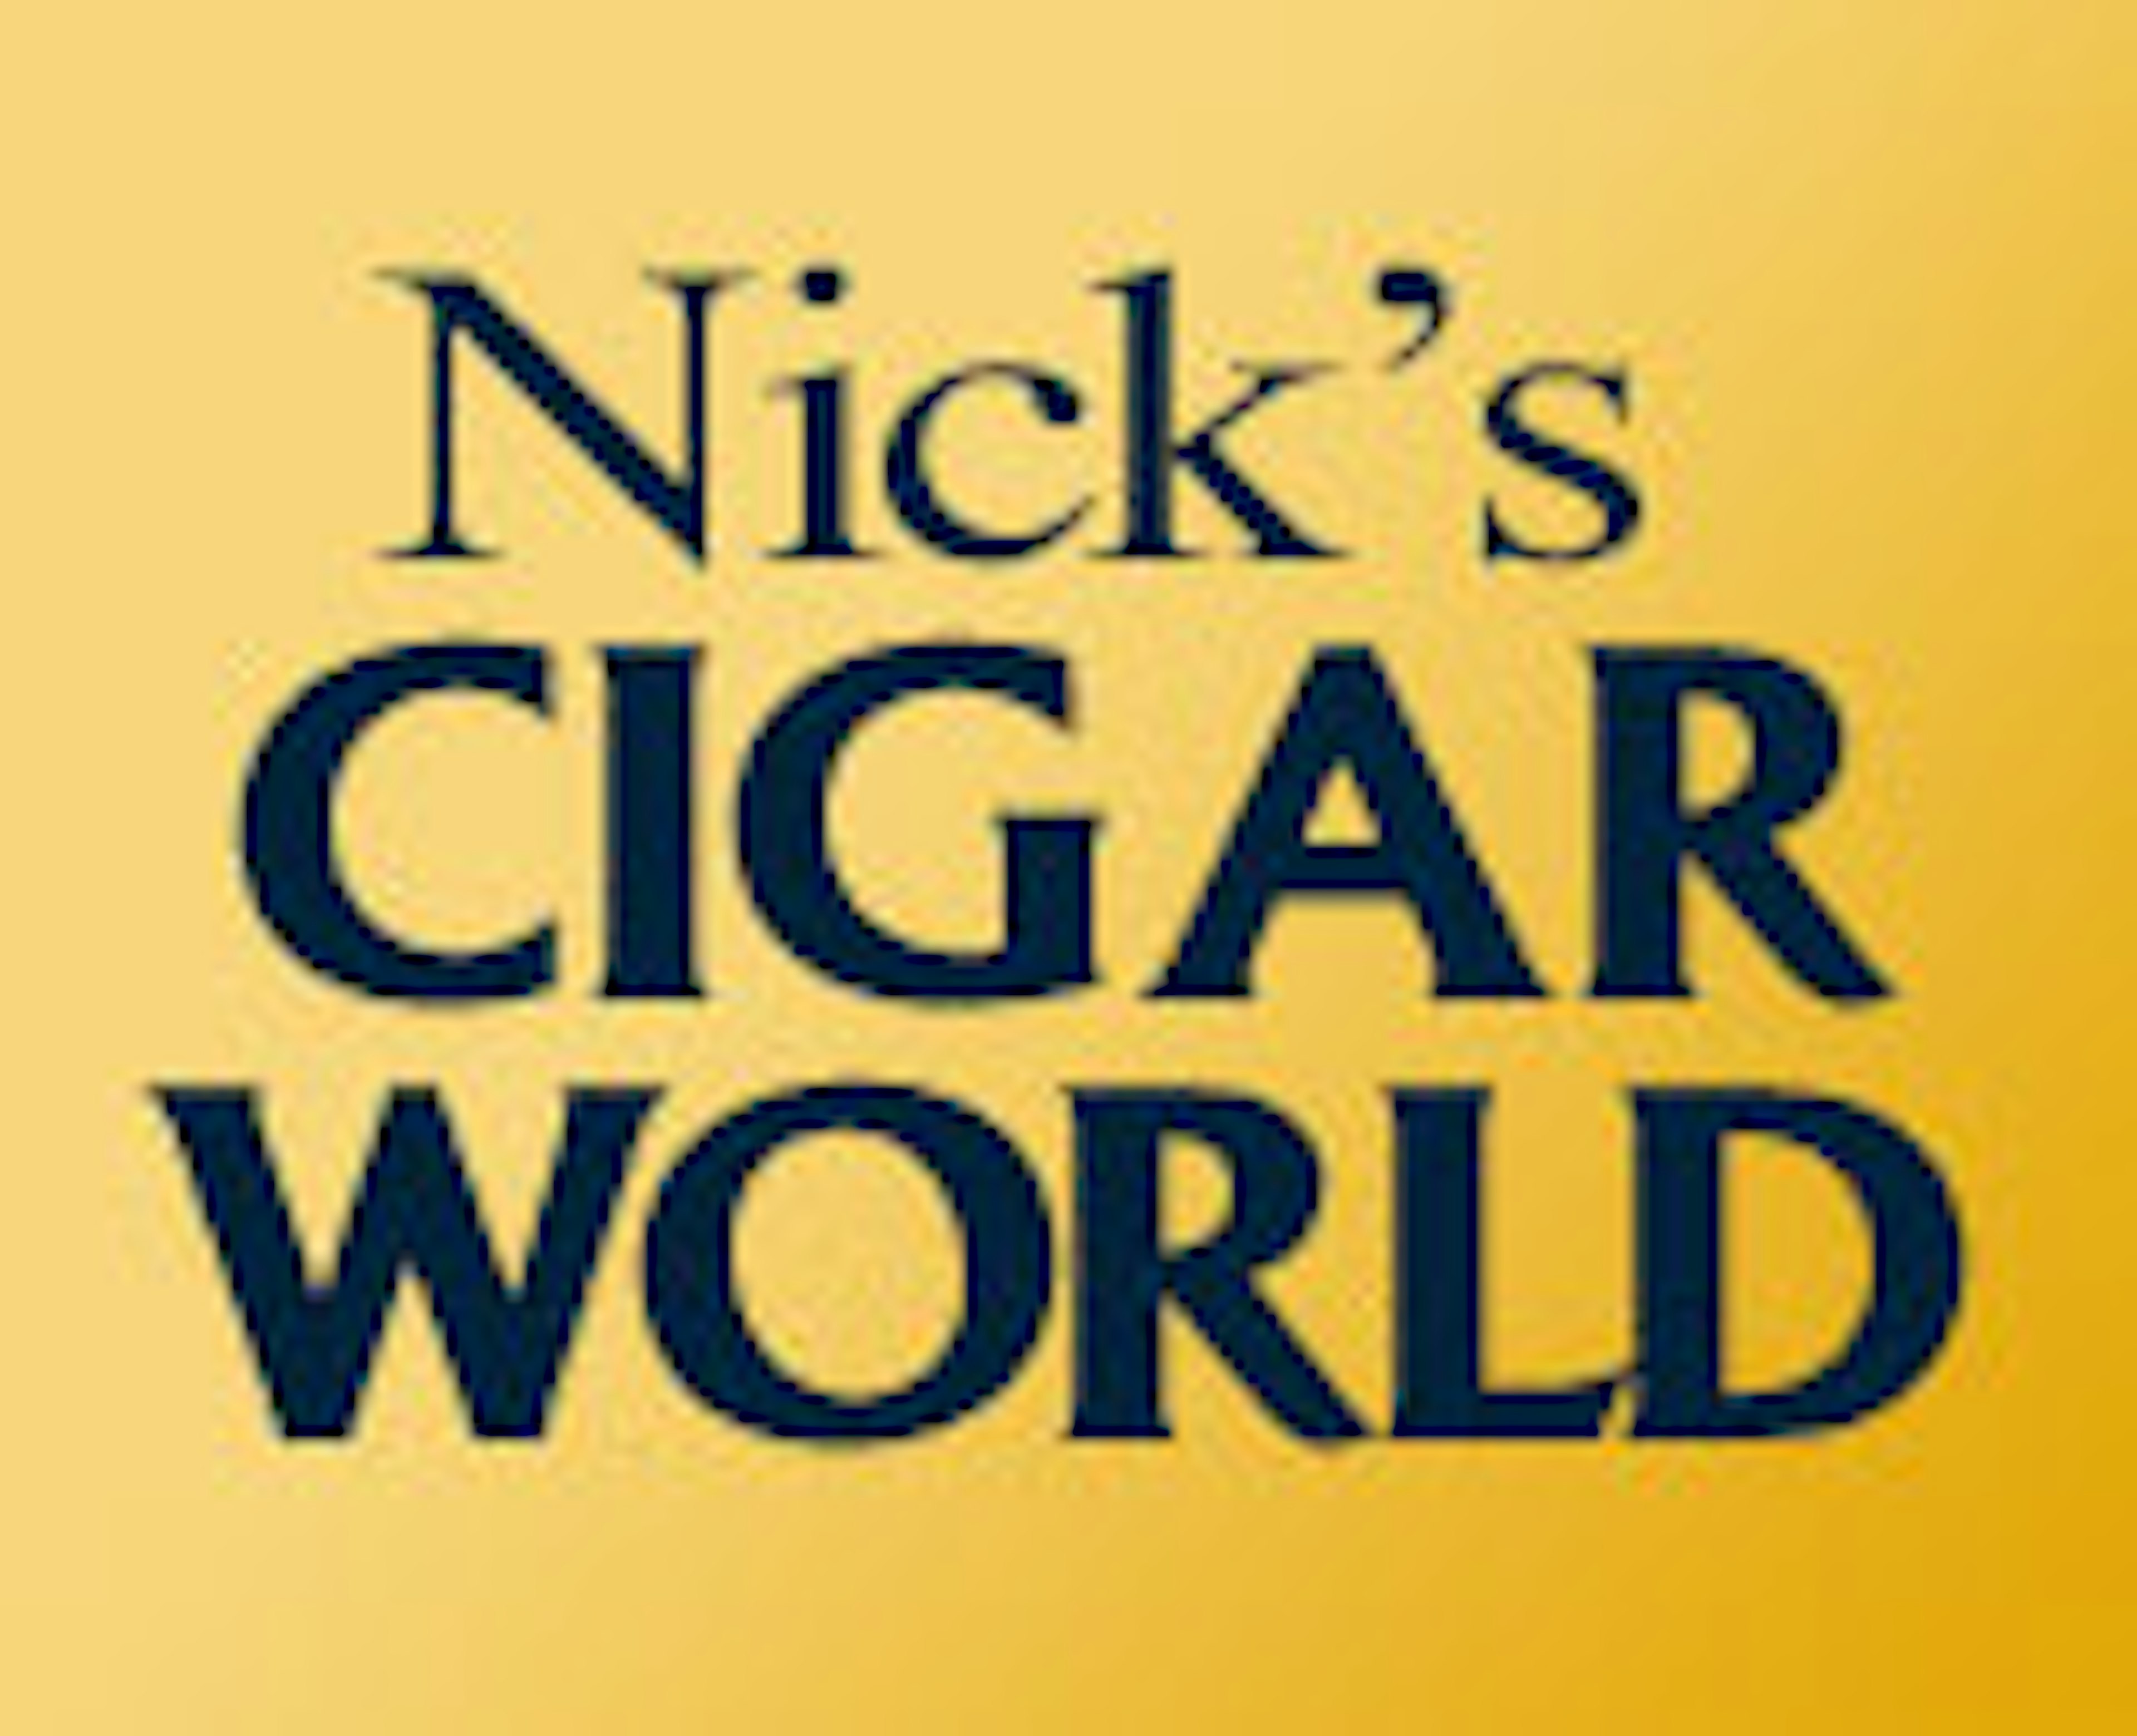 Nick’s Cigar World